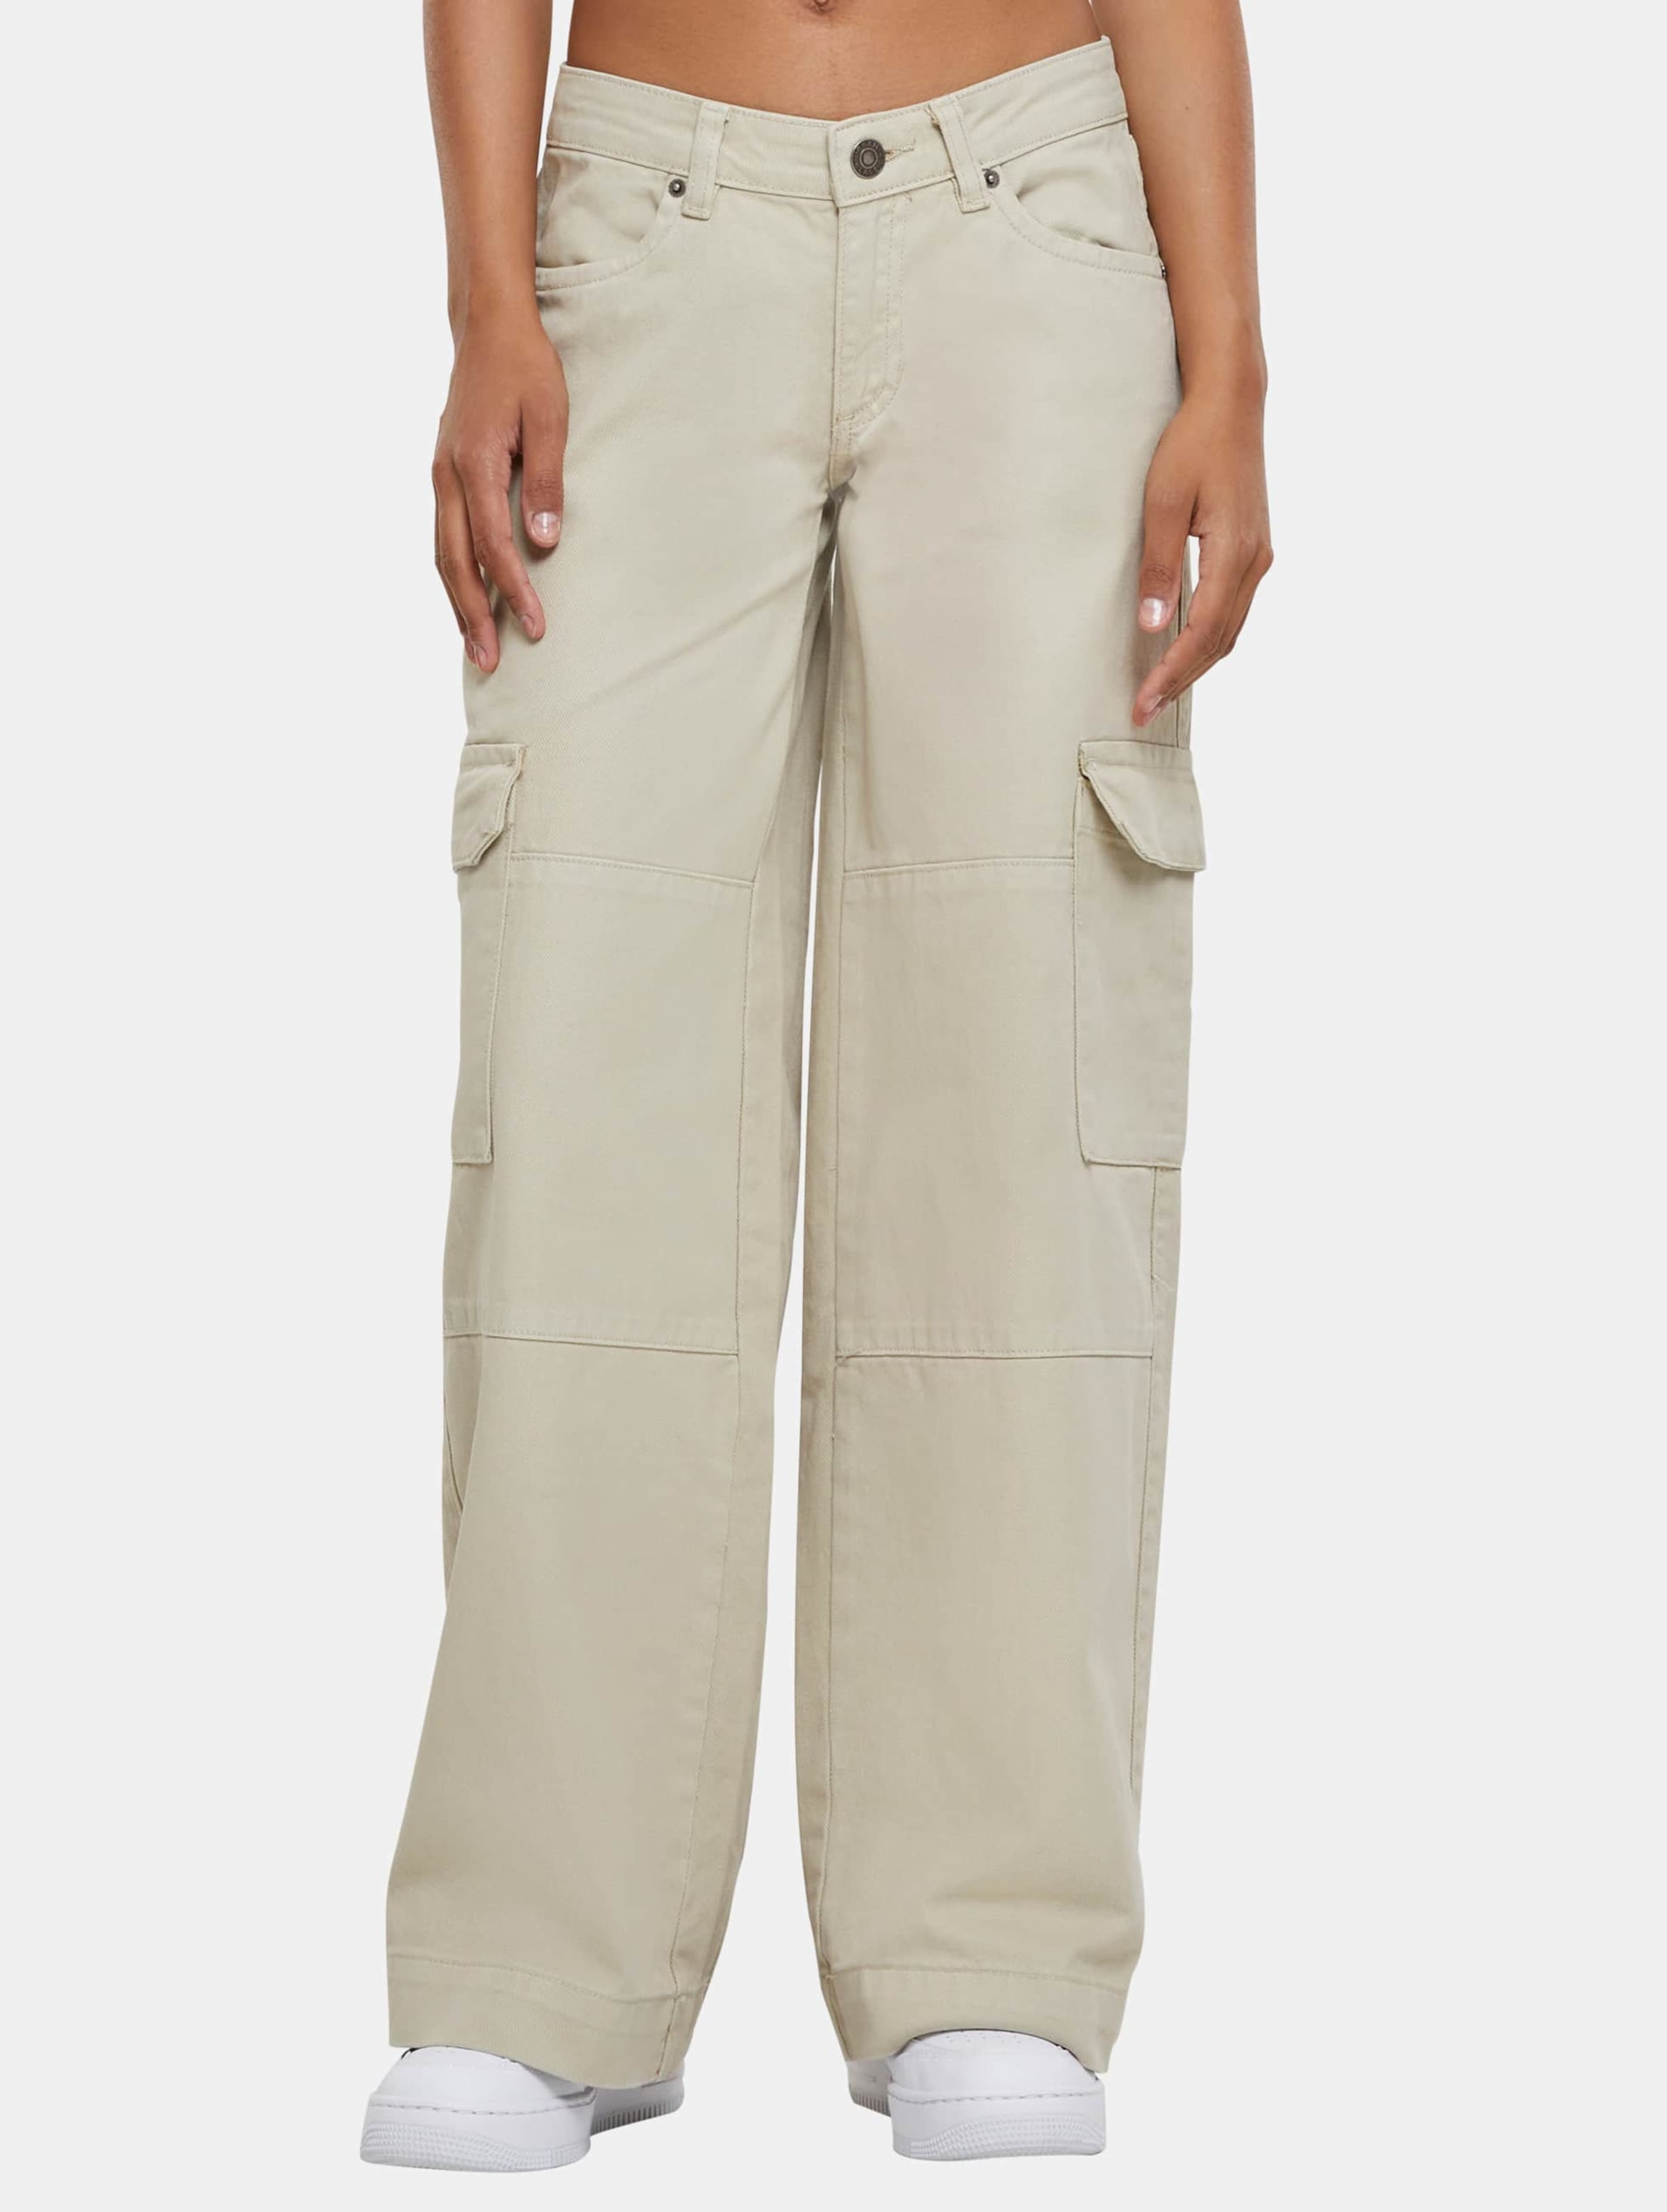 Urban Classics - Low Waist Denim Cargo trousers - Taille, 28 inch - Gebroken wit